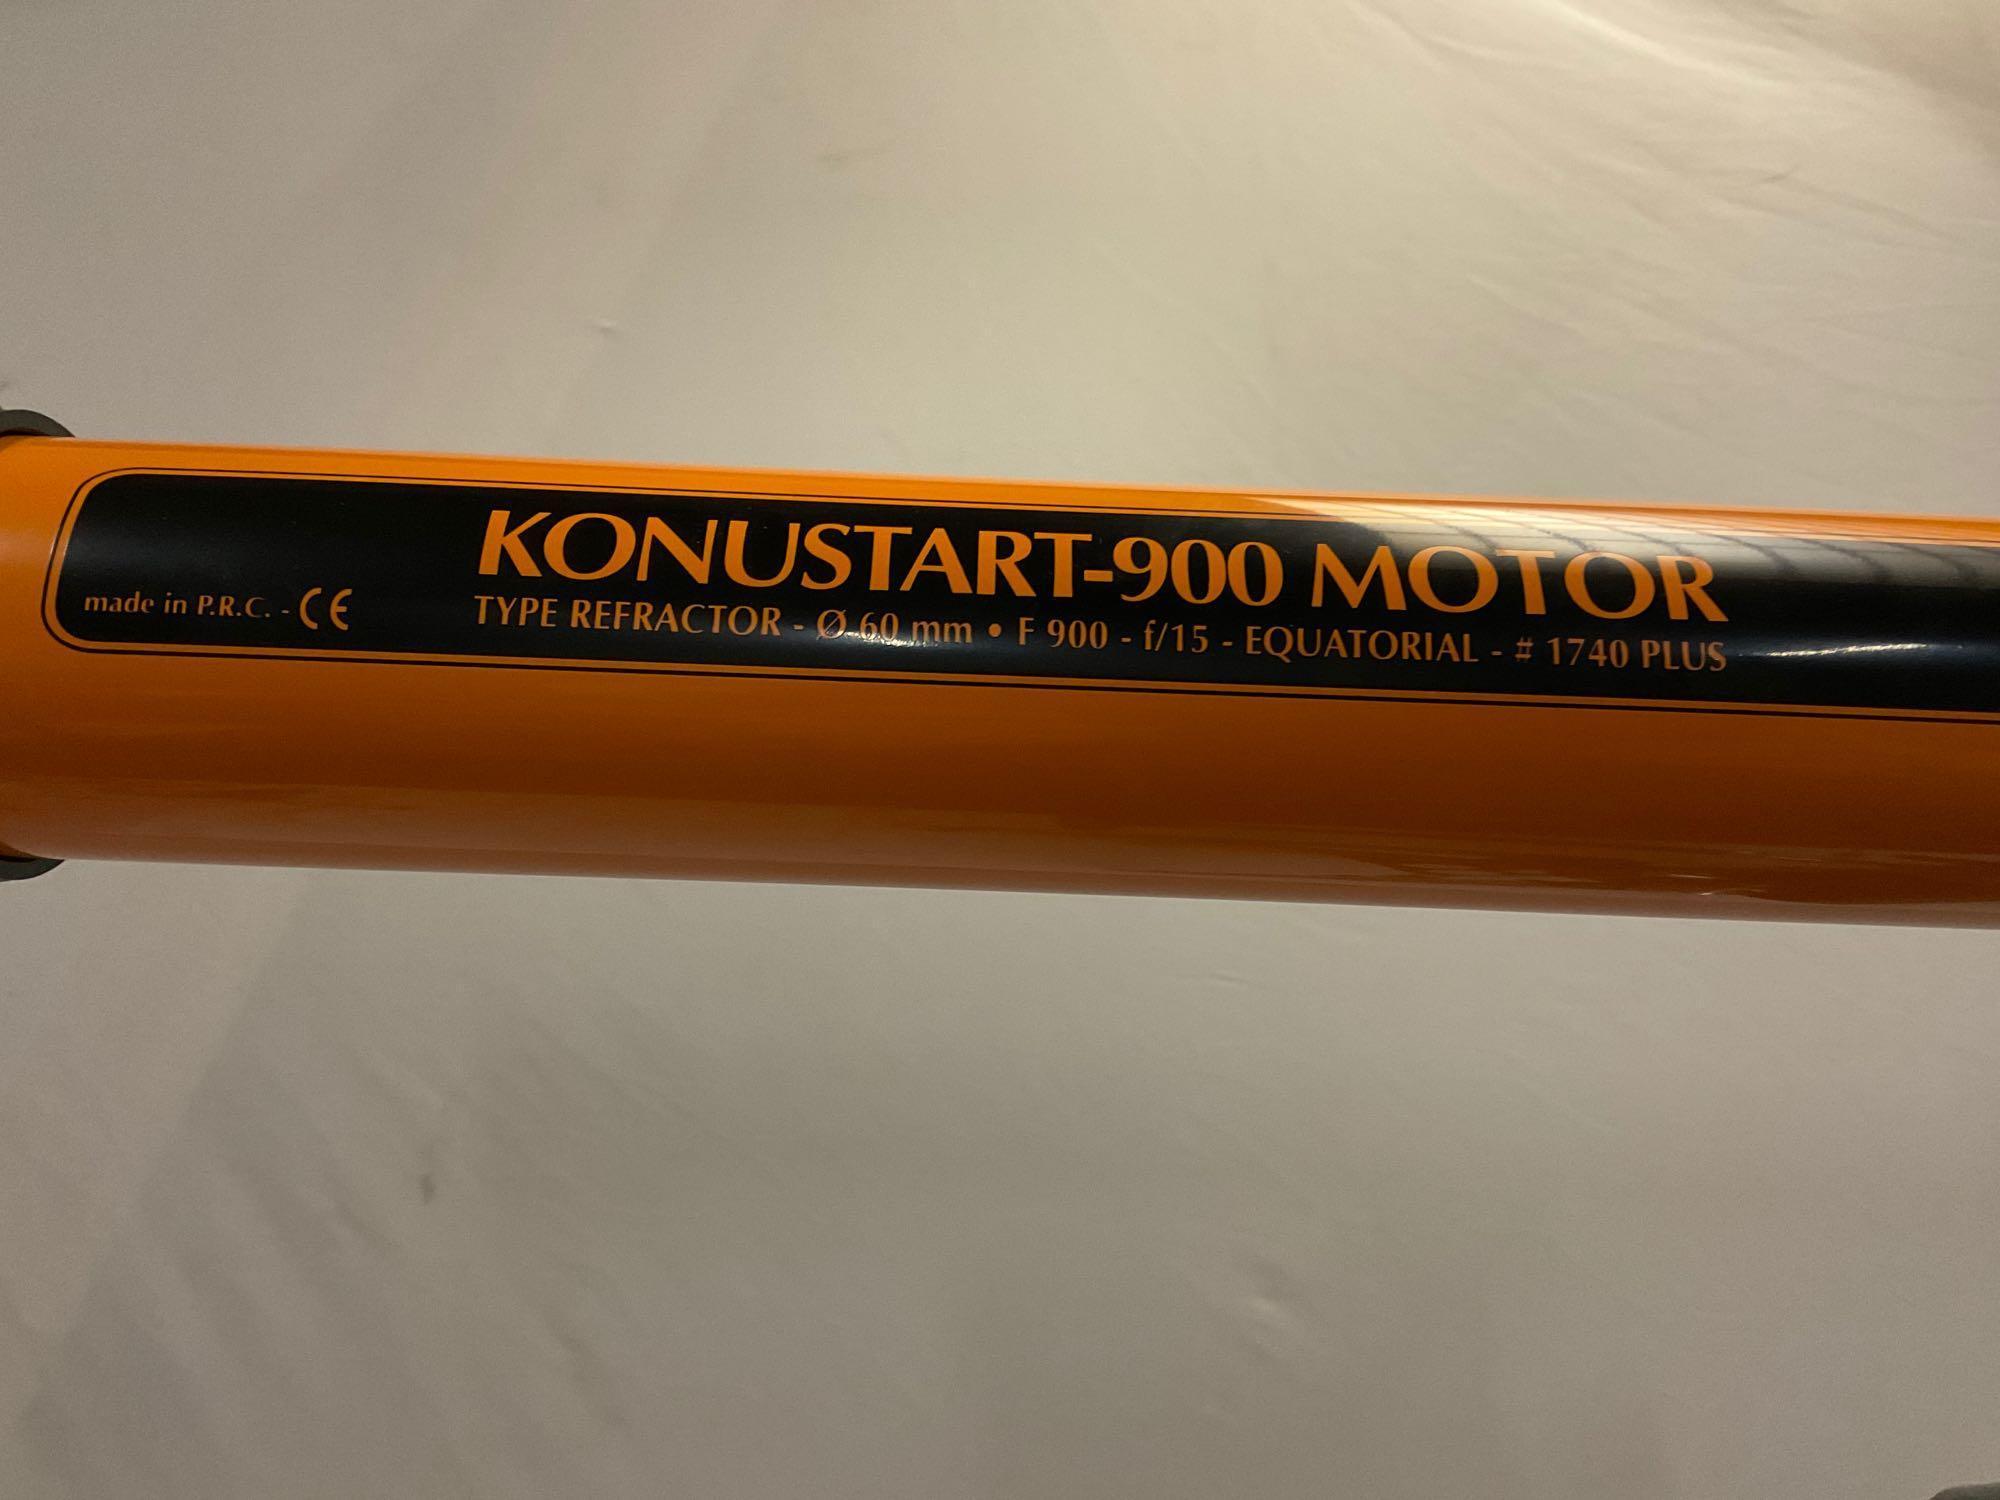 KONUS Konustart-900 Motor telescope w/ stand, sold as is